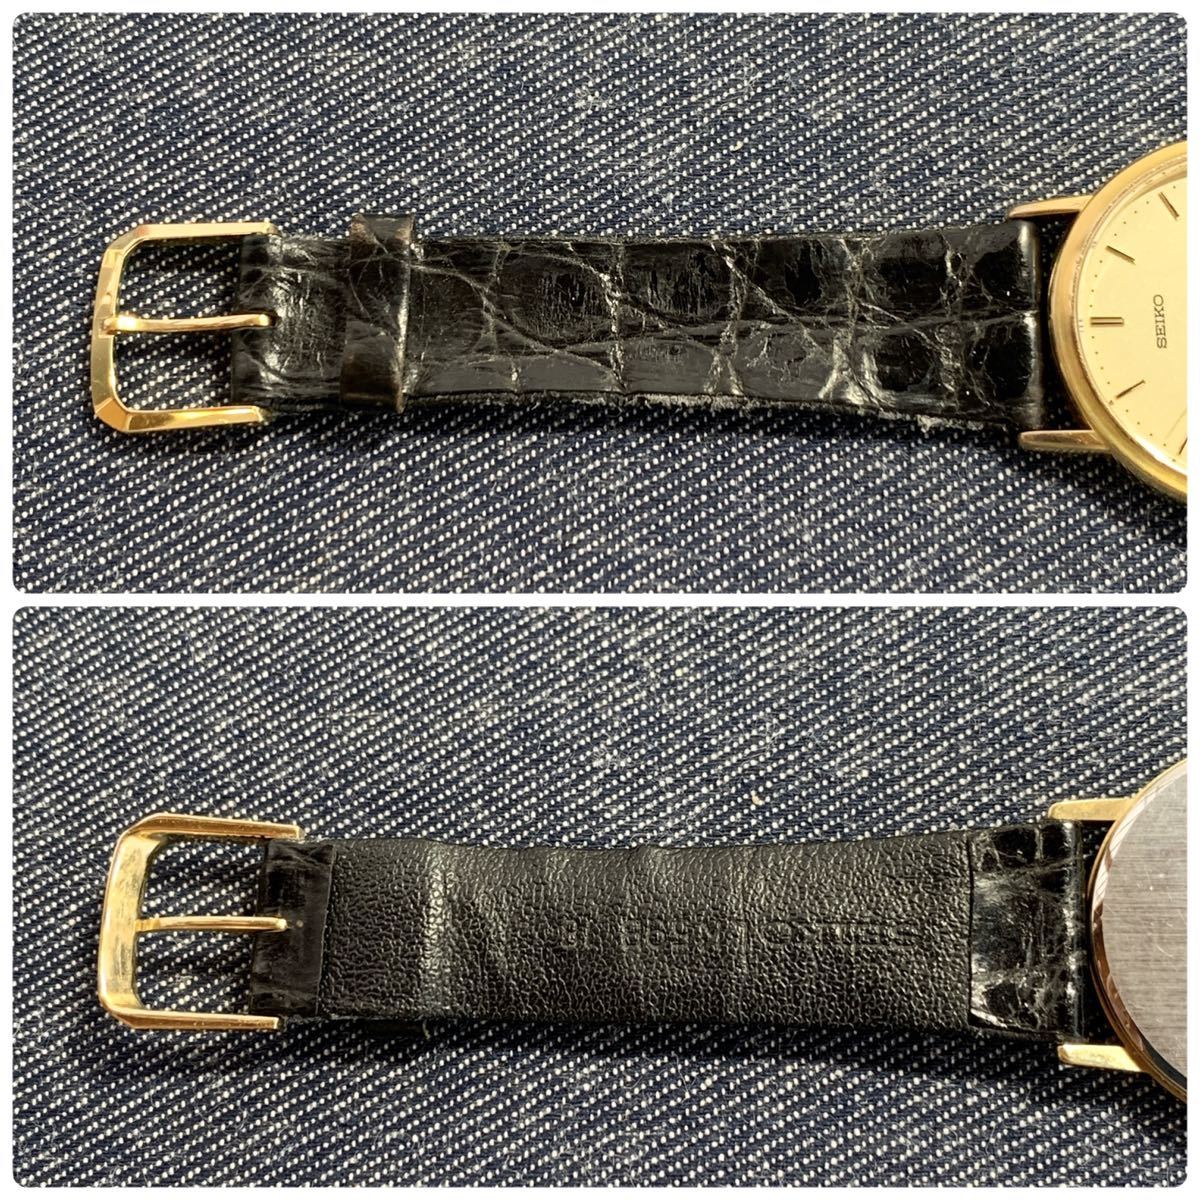  Seiko Dolce wristwatch quartz SEIKO DOLCE case attaching instructions attaching 9531-7000 R126